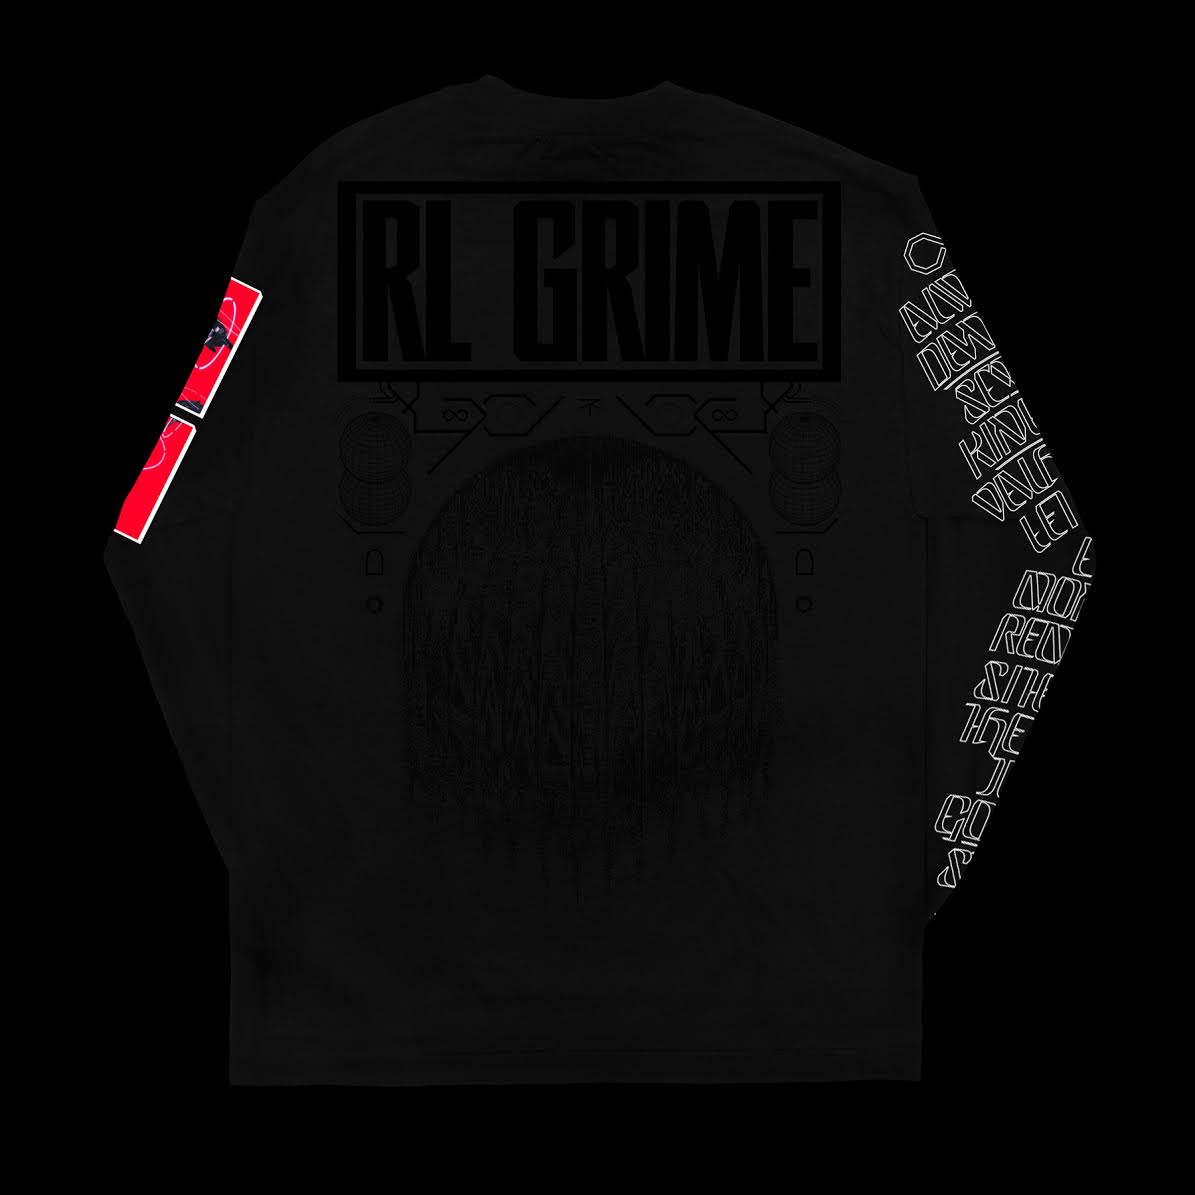 RL Grime shirt